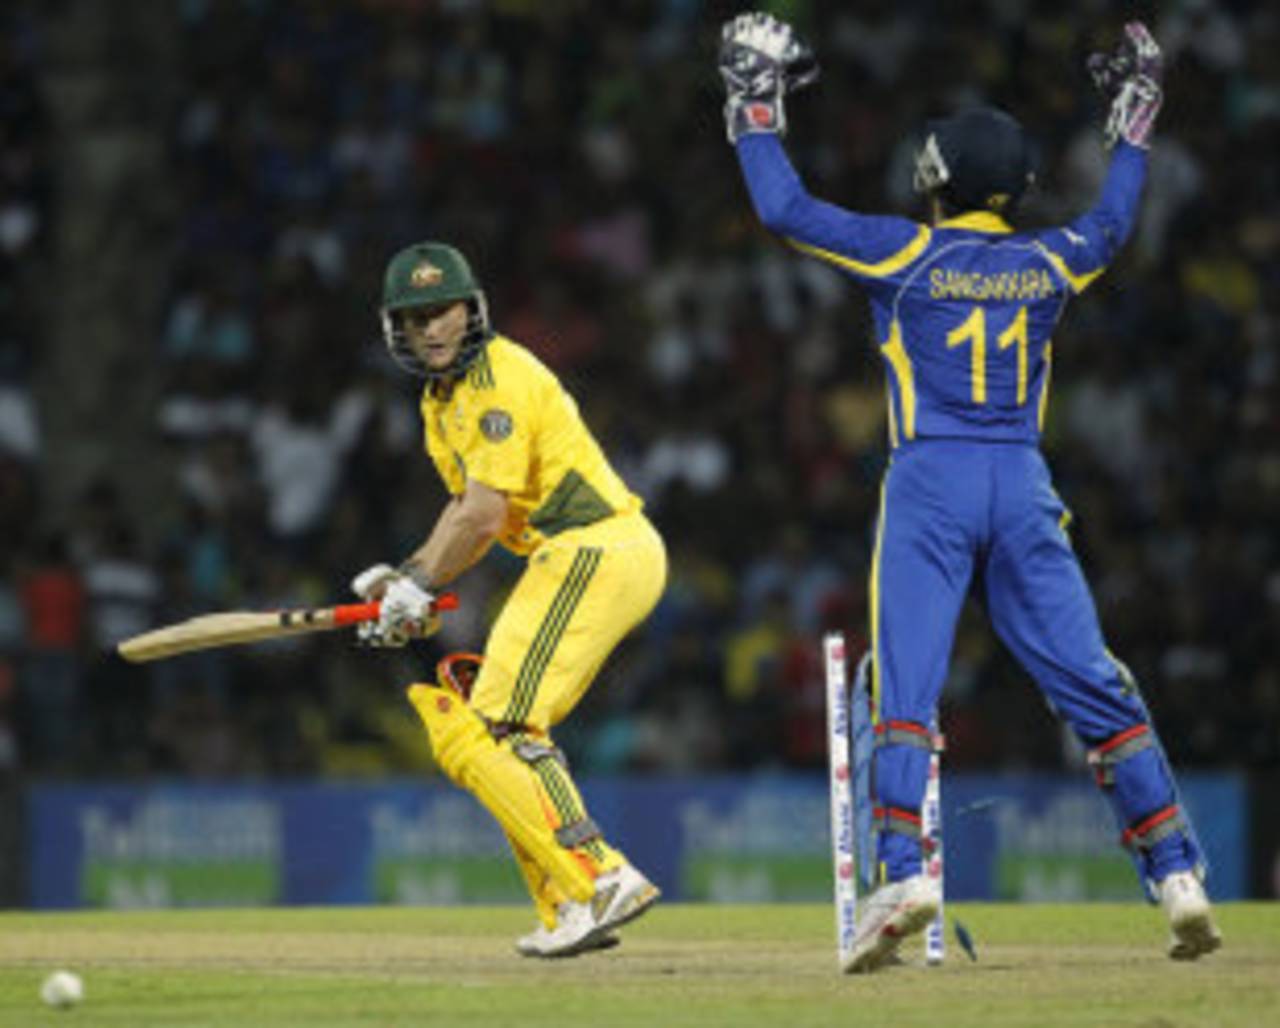 David Hussey is bamboozled by Rangana Herath, Sri Lanka v Australia, 2nd Twenty20, Pallekele, August 8, 2011